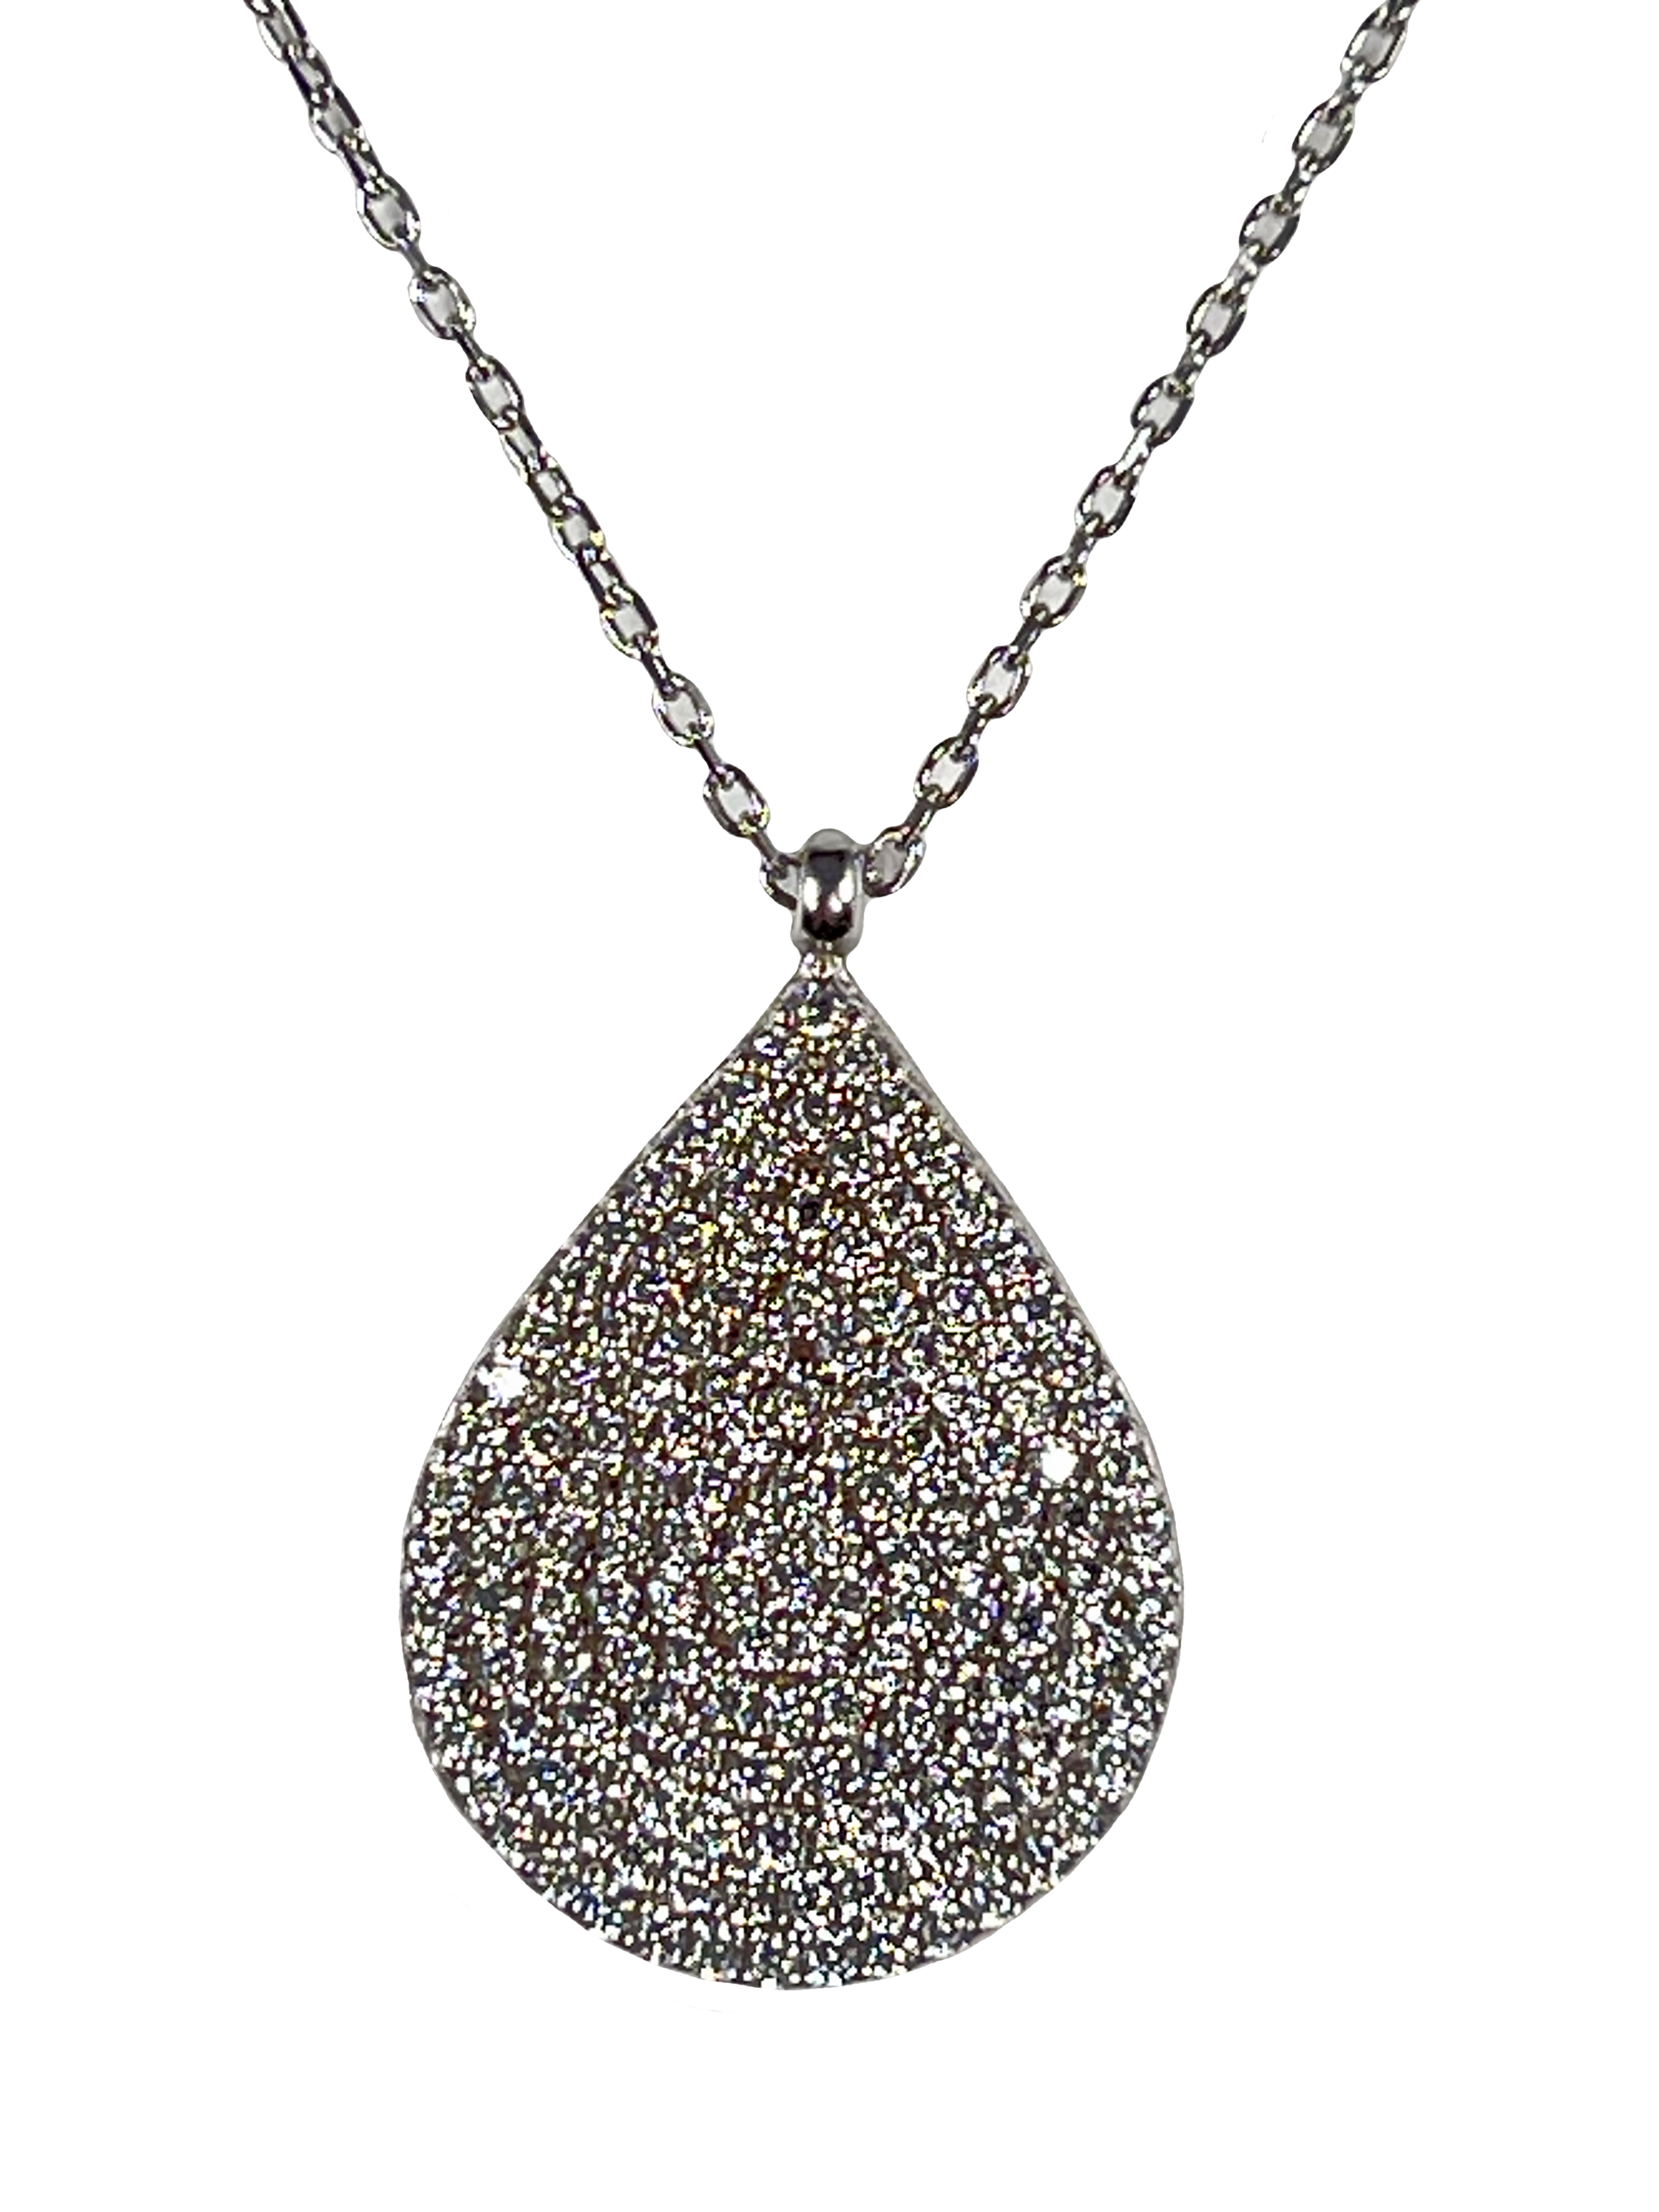 Silver drop necklace with crystals